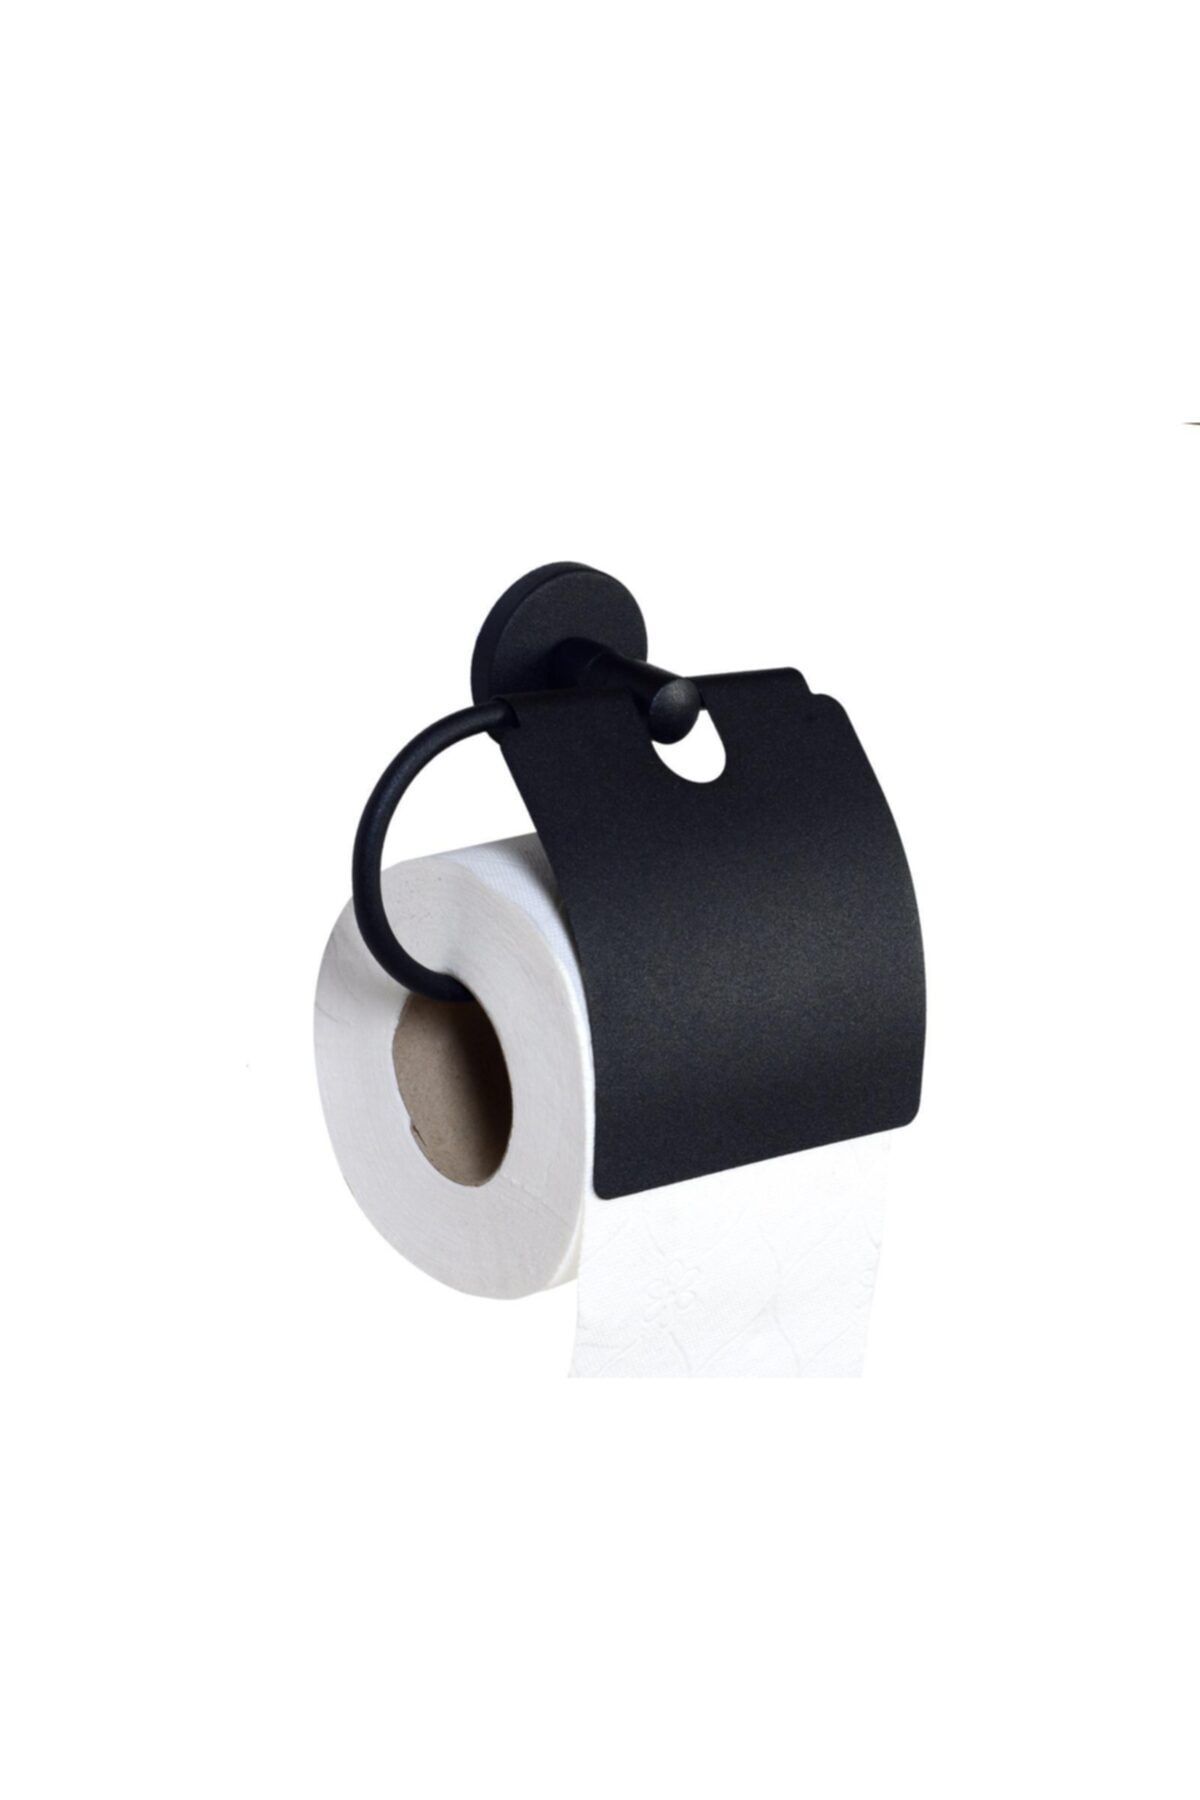 MultiStore Siyah Paslanmaz Wc Kağıtlık Kapaklı Tuvalet Kağıtlığı Tuvalet Kağıdı Askısı